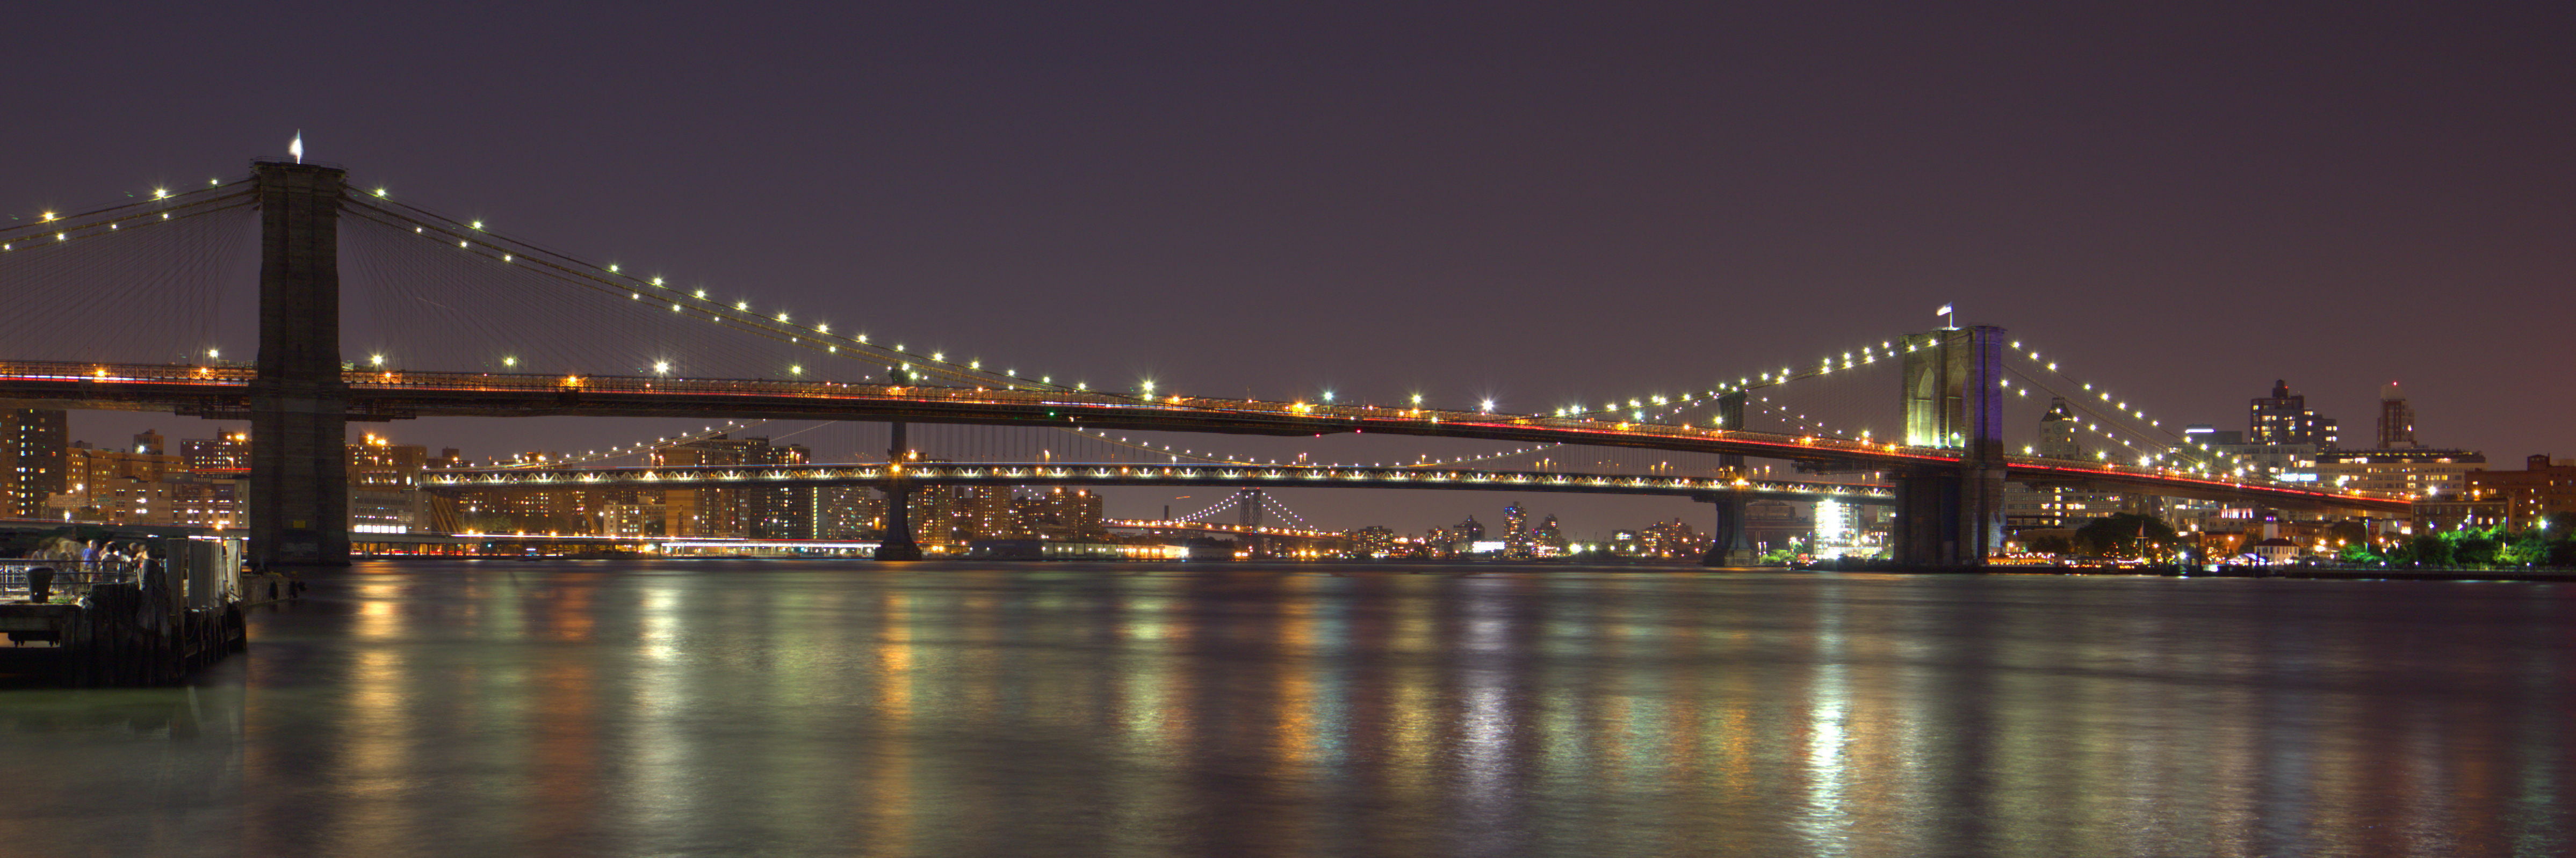 photo of Brooklyn bridge during night, manhattan, williamsburg bridges